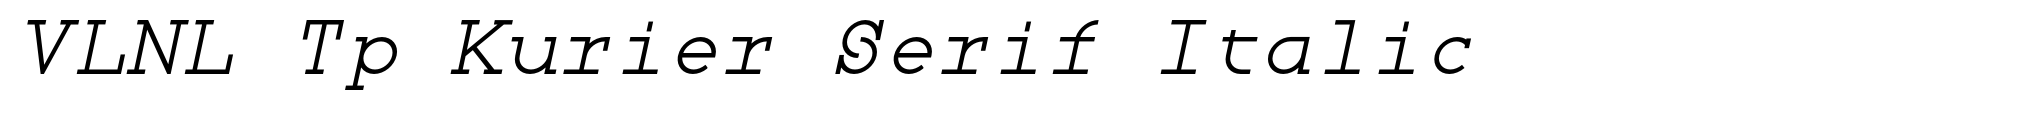 VLNL Tp Kurier Serif Italic image